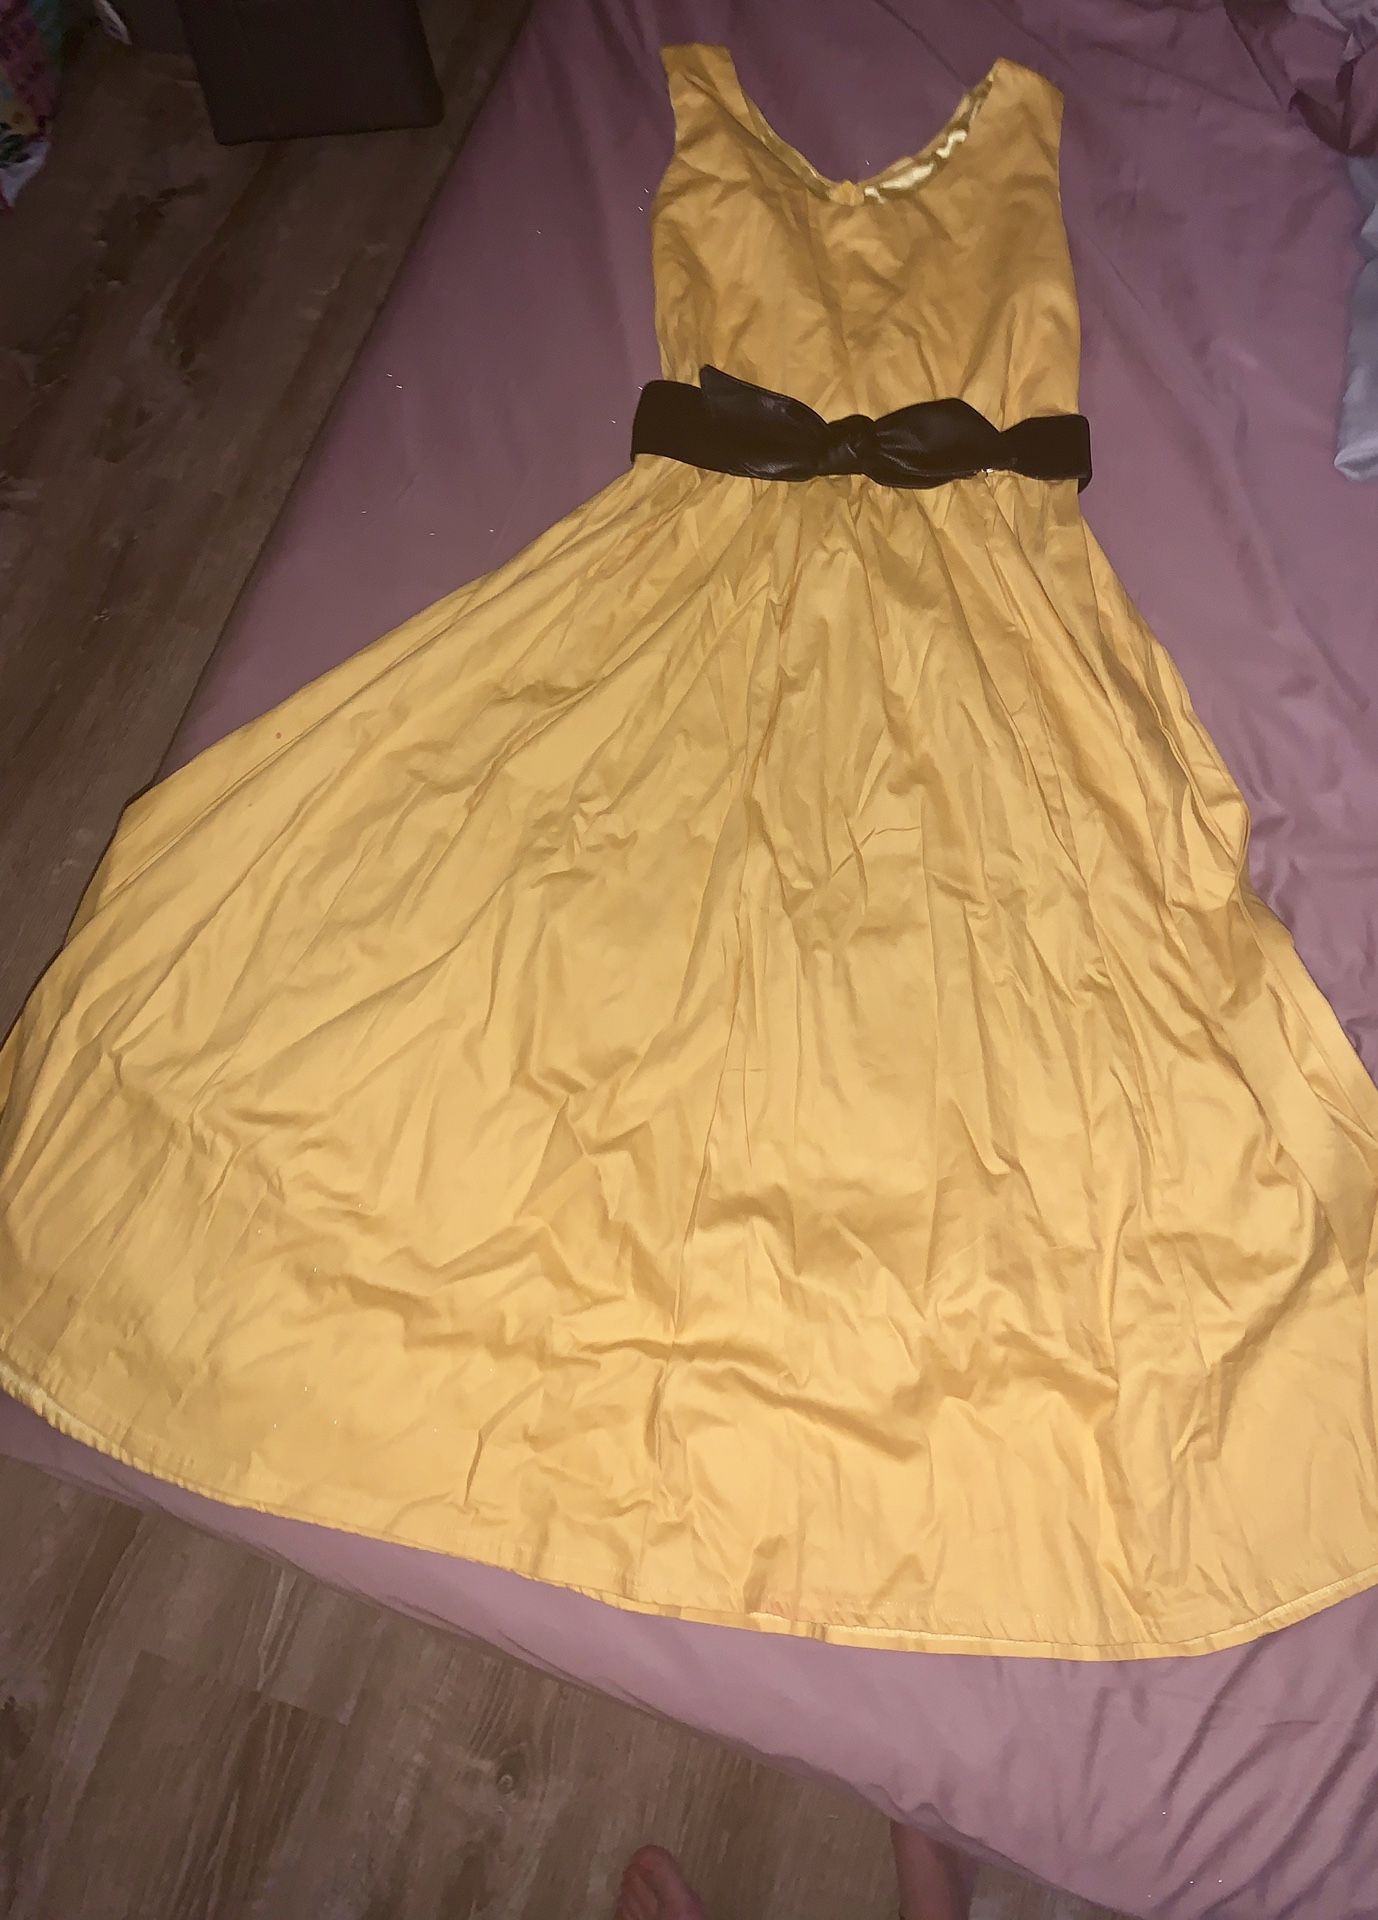 The most interesting shade of yellow, ladies dress size medium